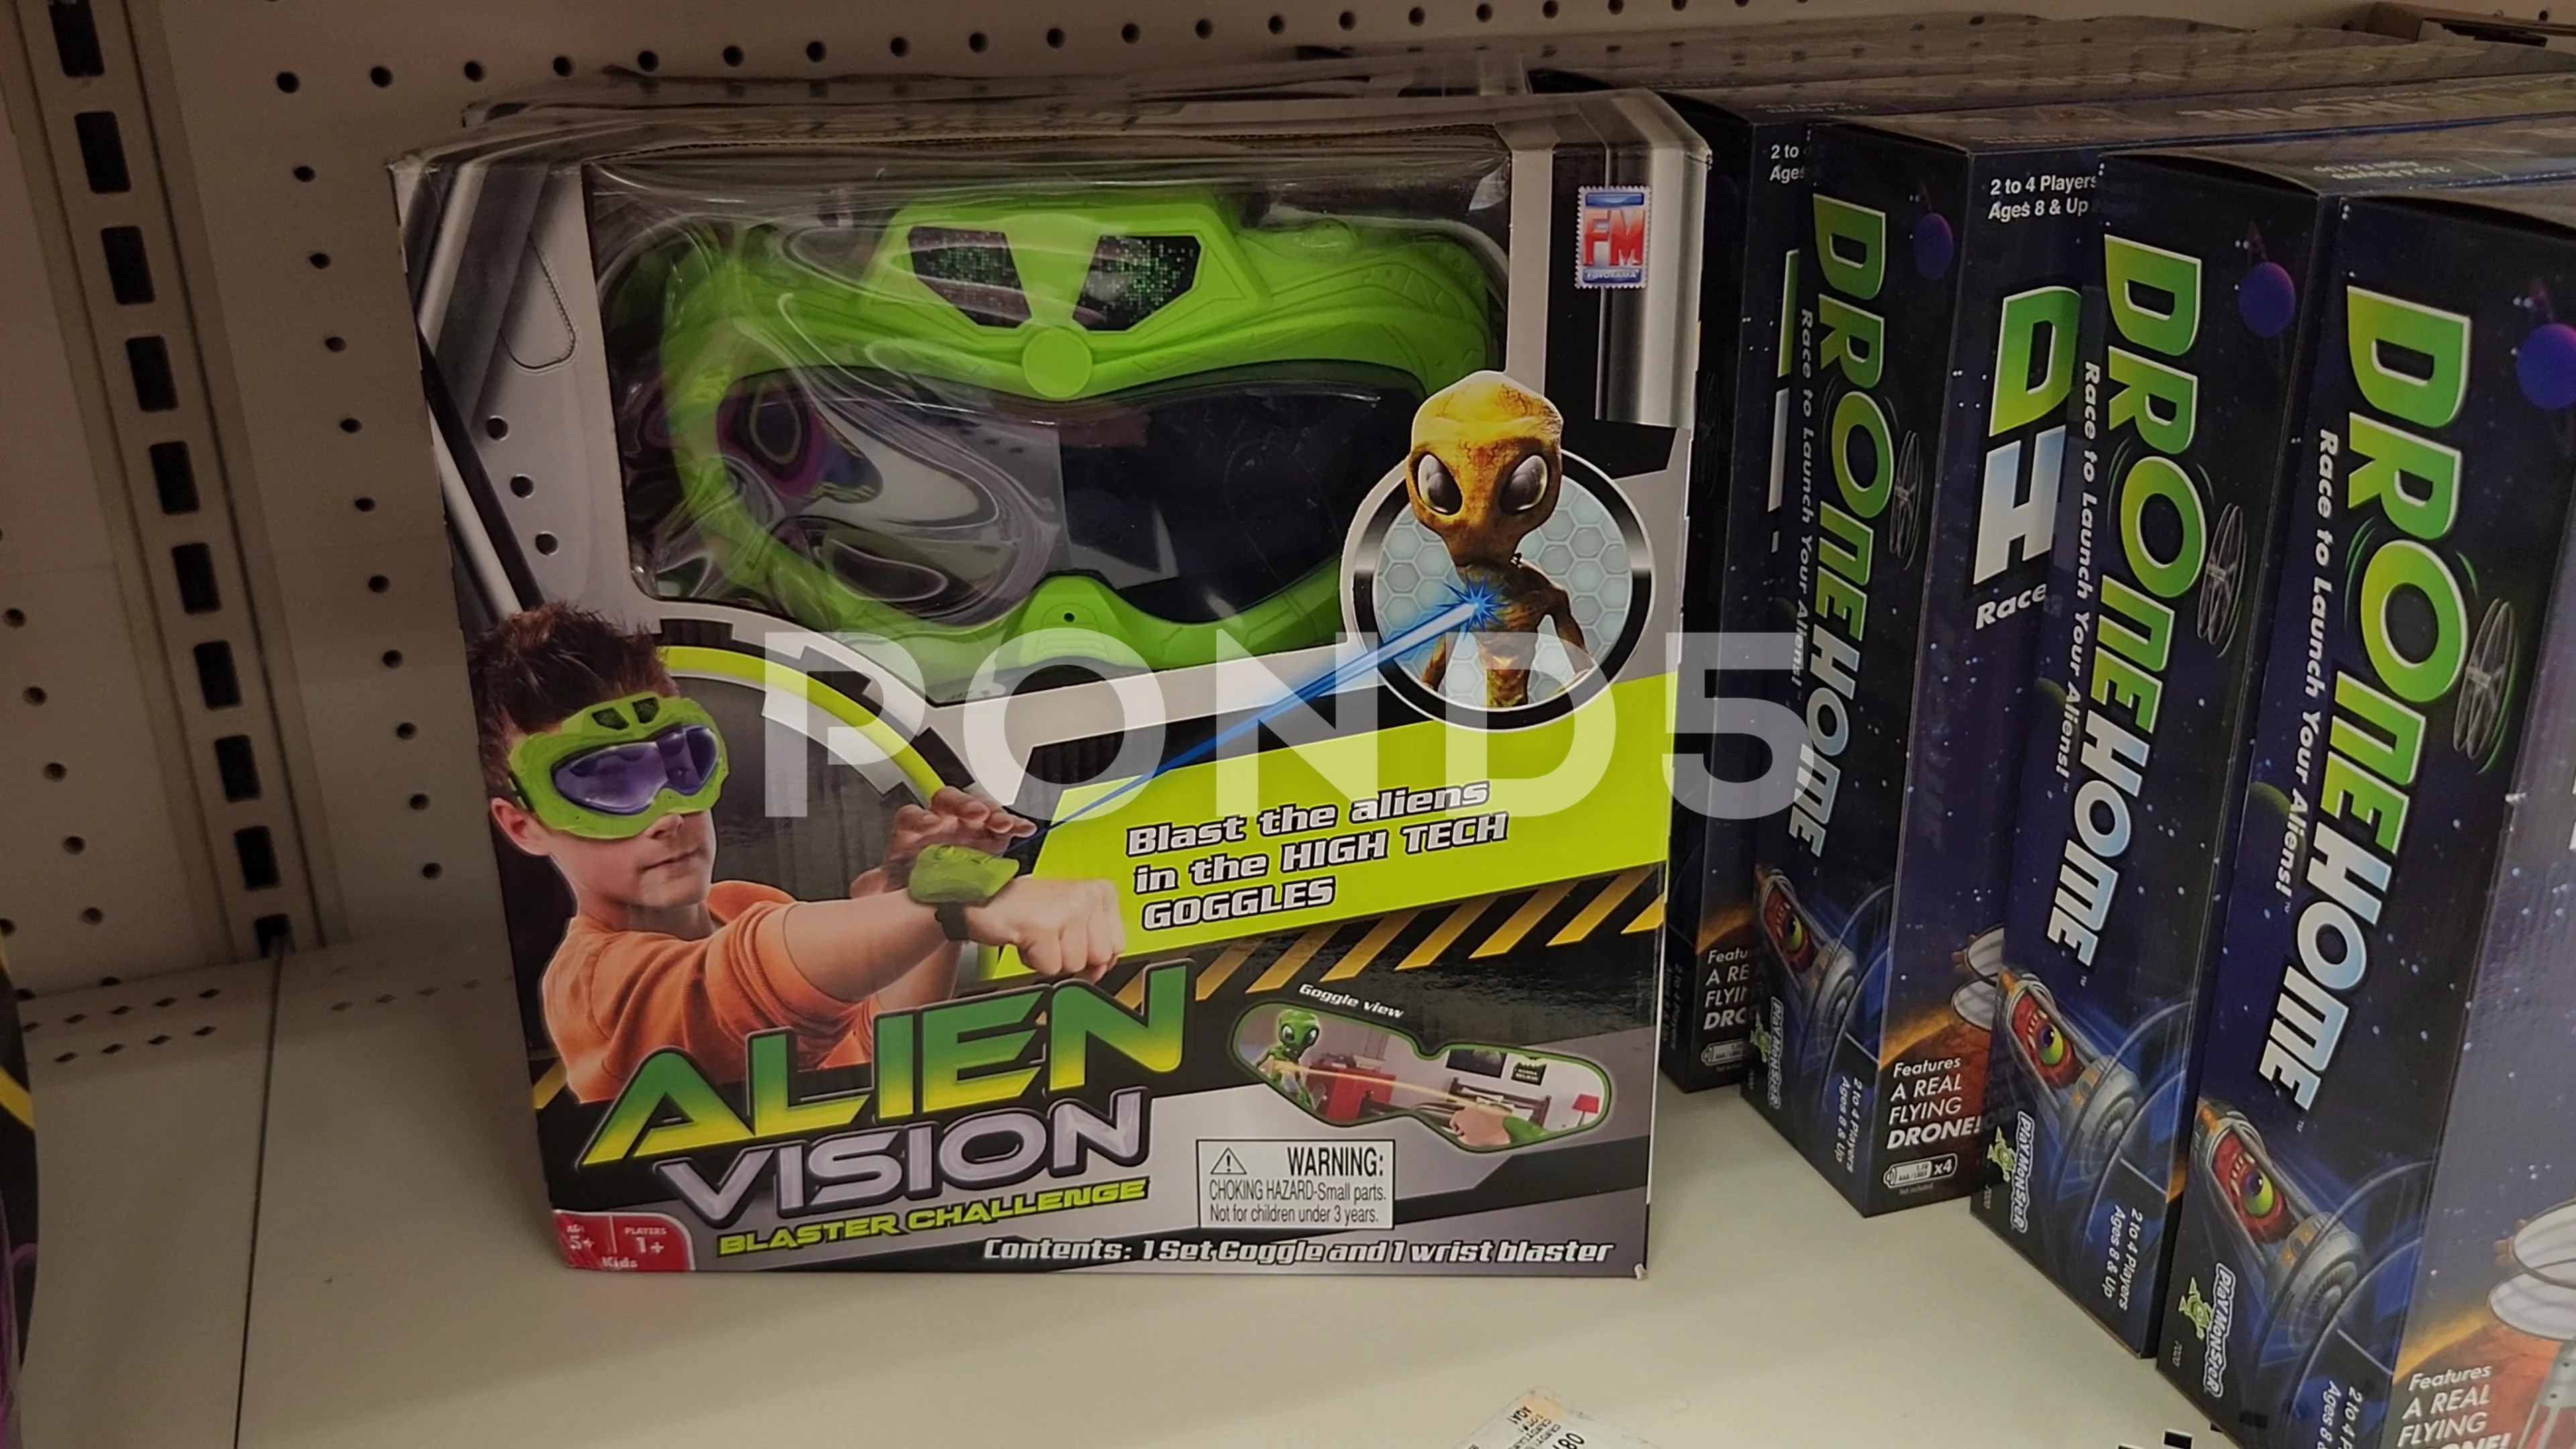 https://images.pond5.com/alien-vision-product-retailer-toys-229408638_prevstill.jpeg